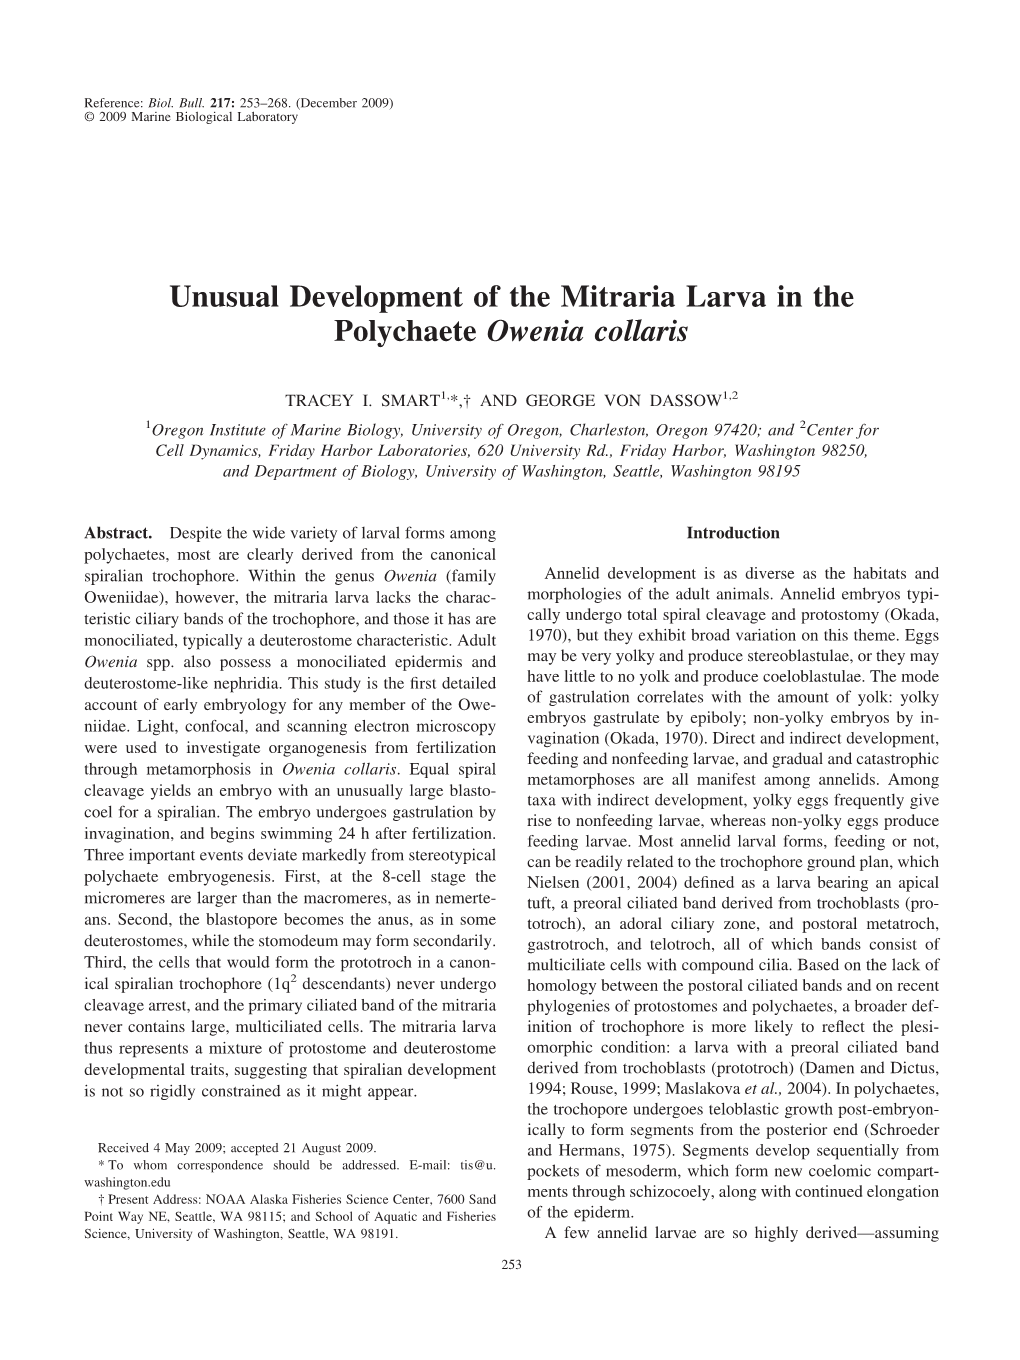 Unusual Development of the Mitraria Larva in the Polychaete Owenia Collaris